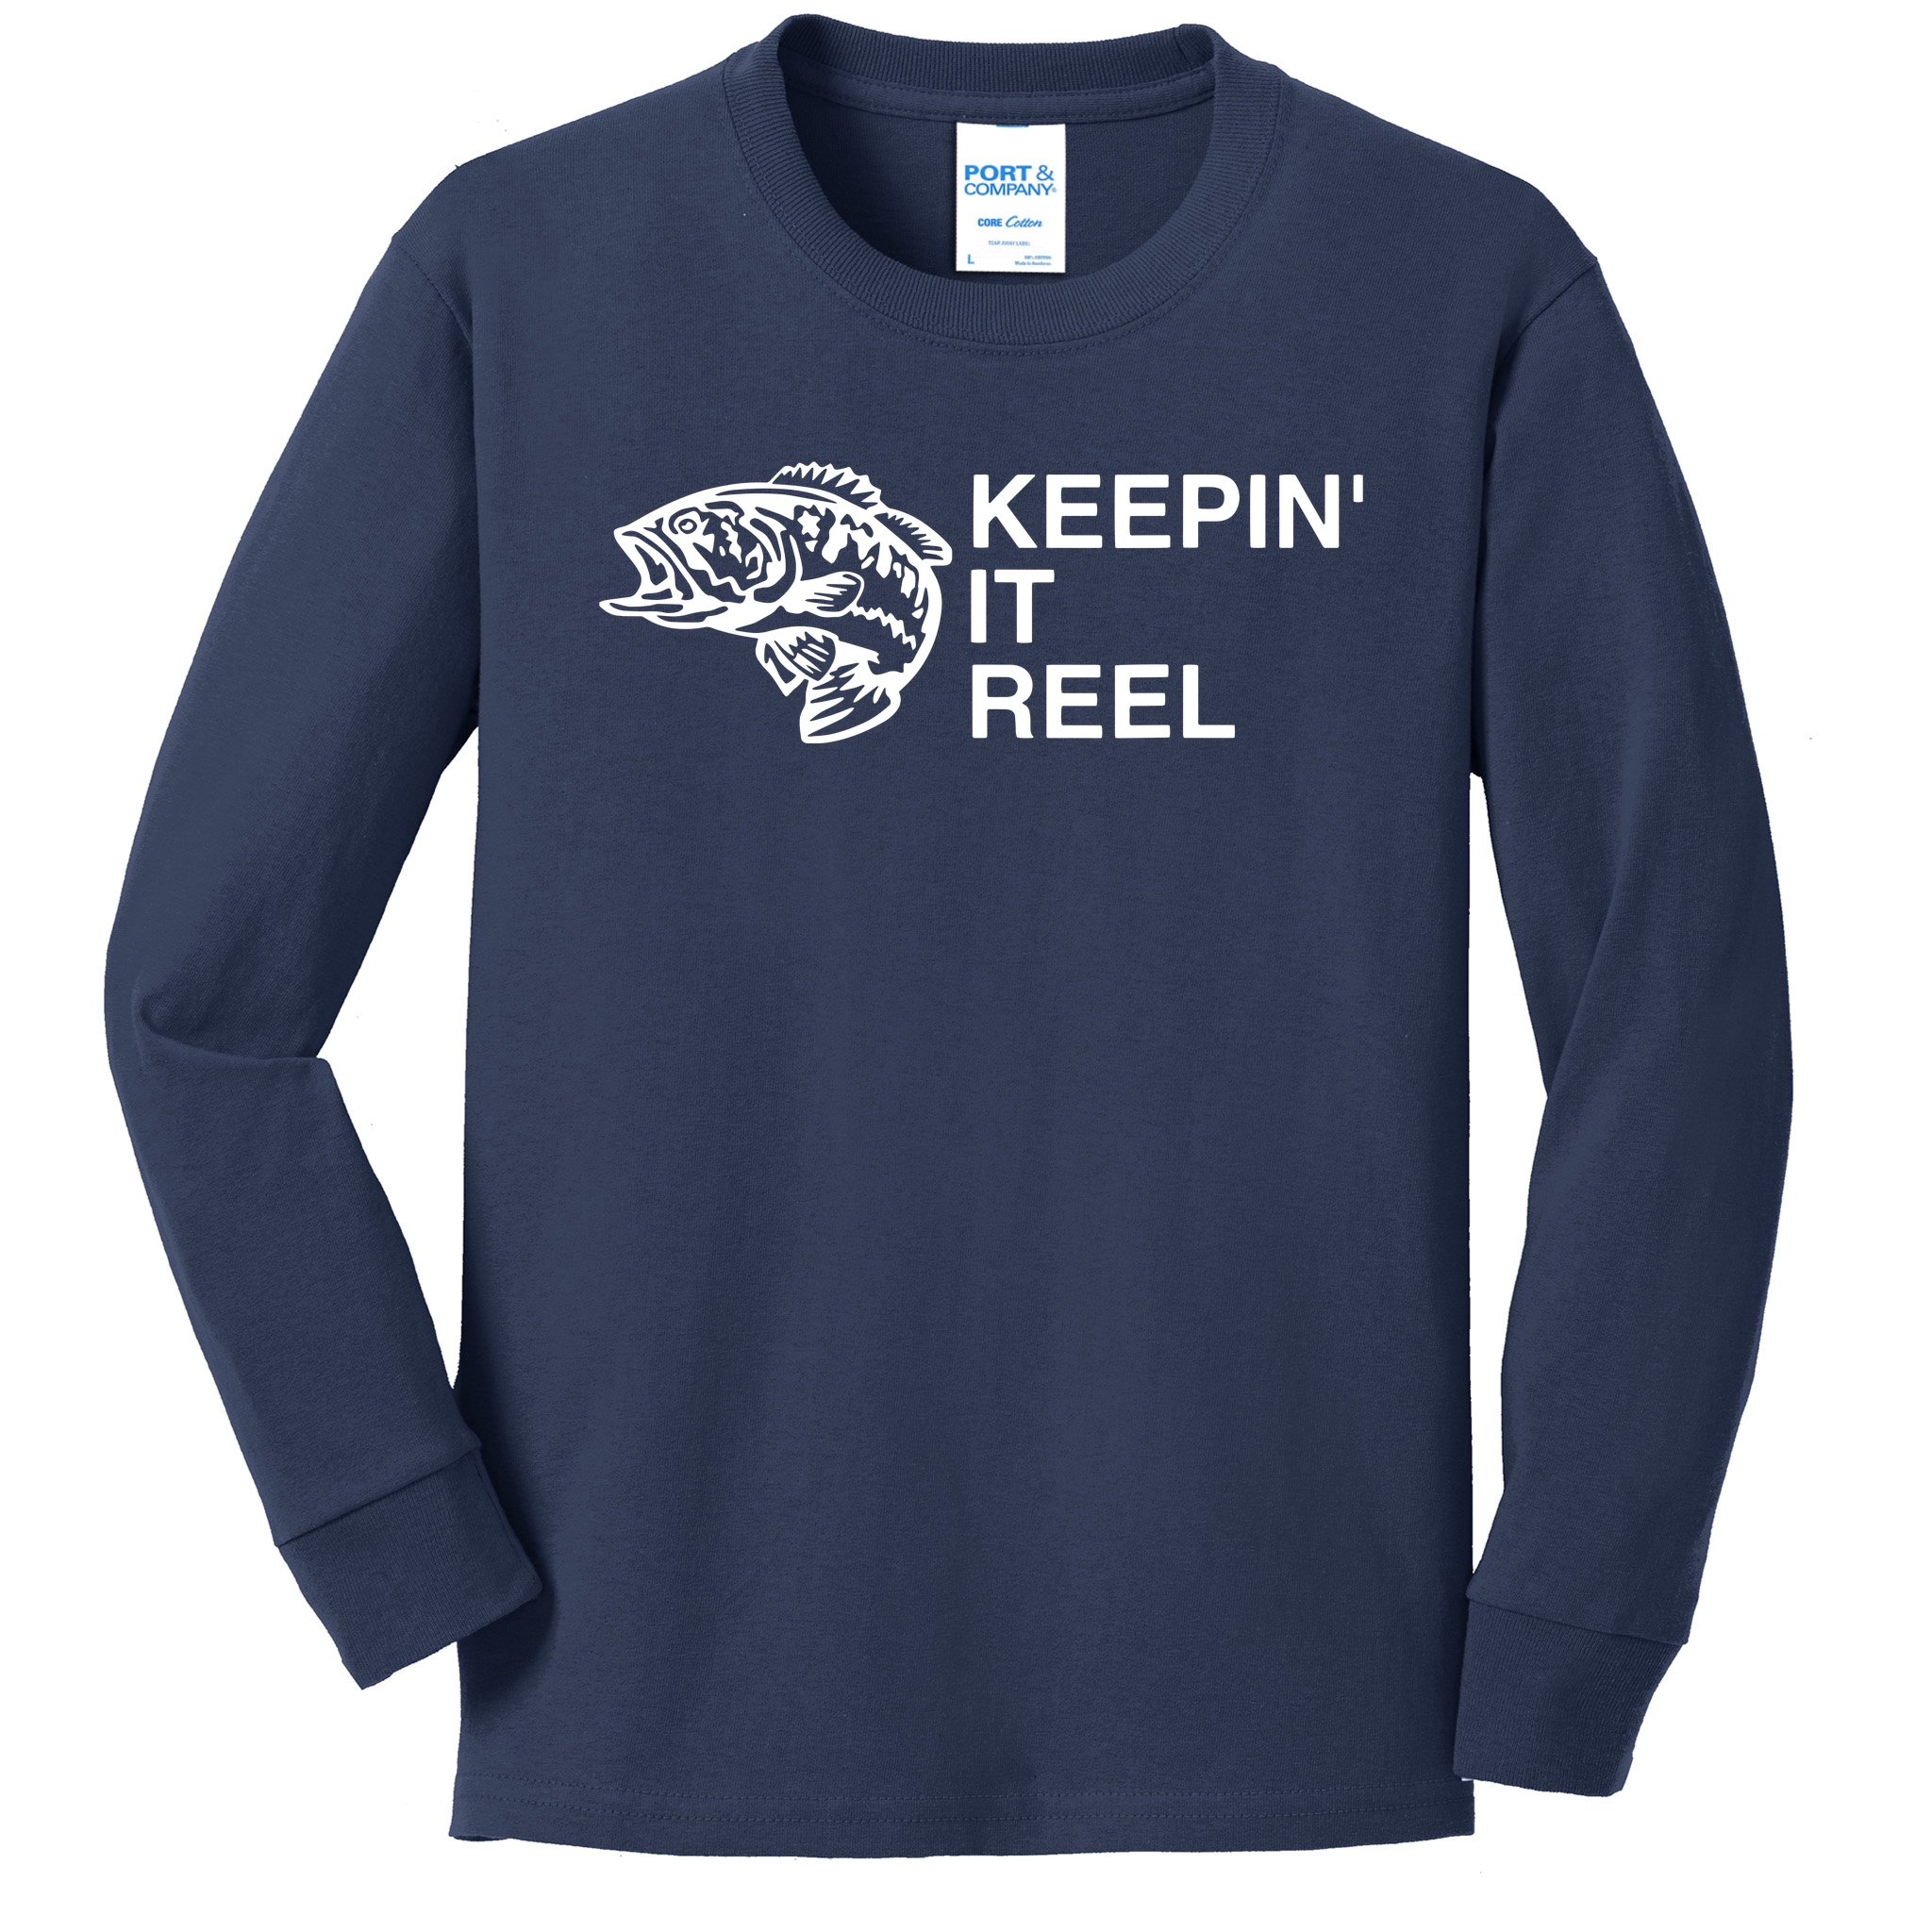 Keeping It Reel Shirts Funny Fishing Sayings Kids Long Sleeve